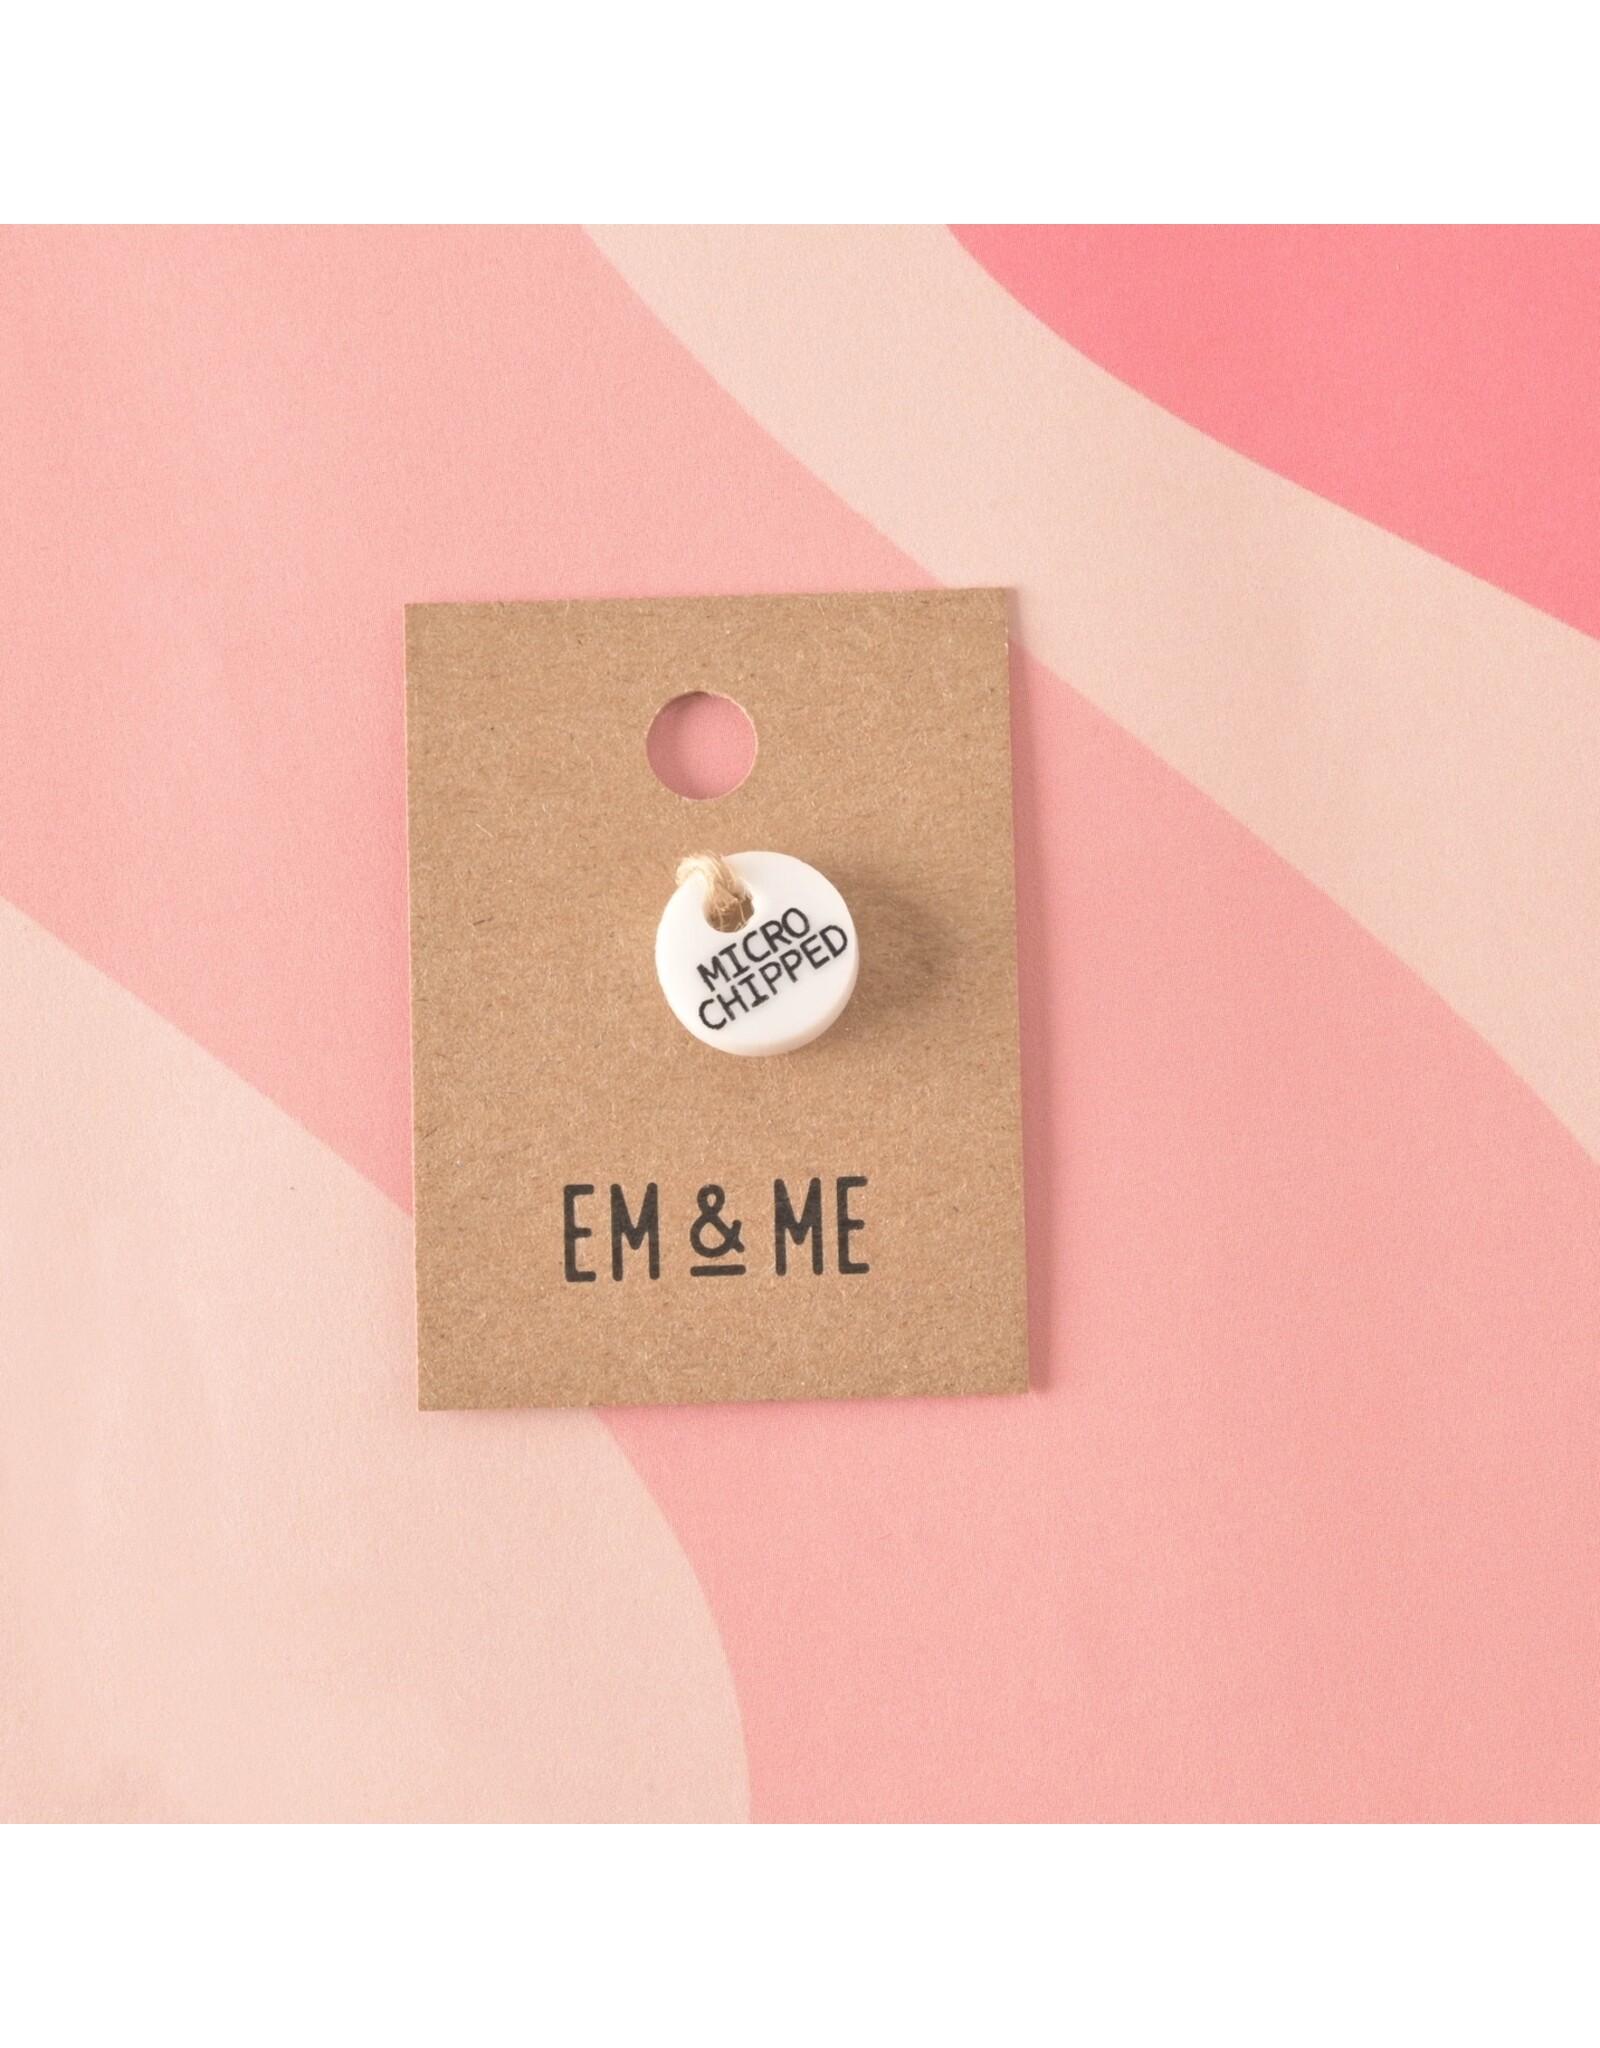 Em & Me Studio White "Microchipped" Tag